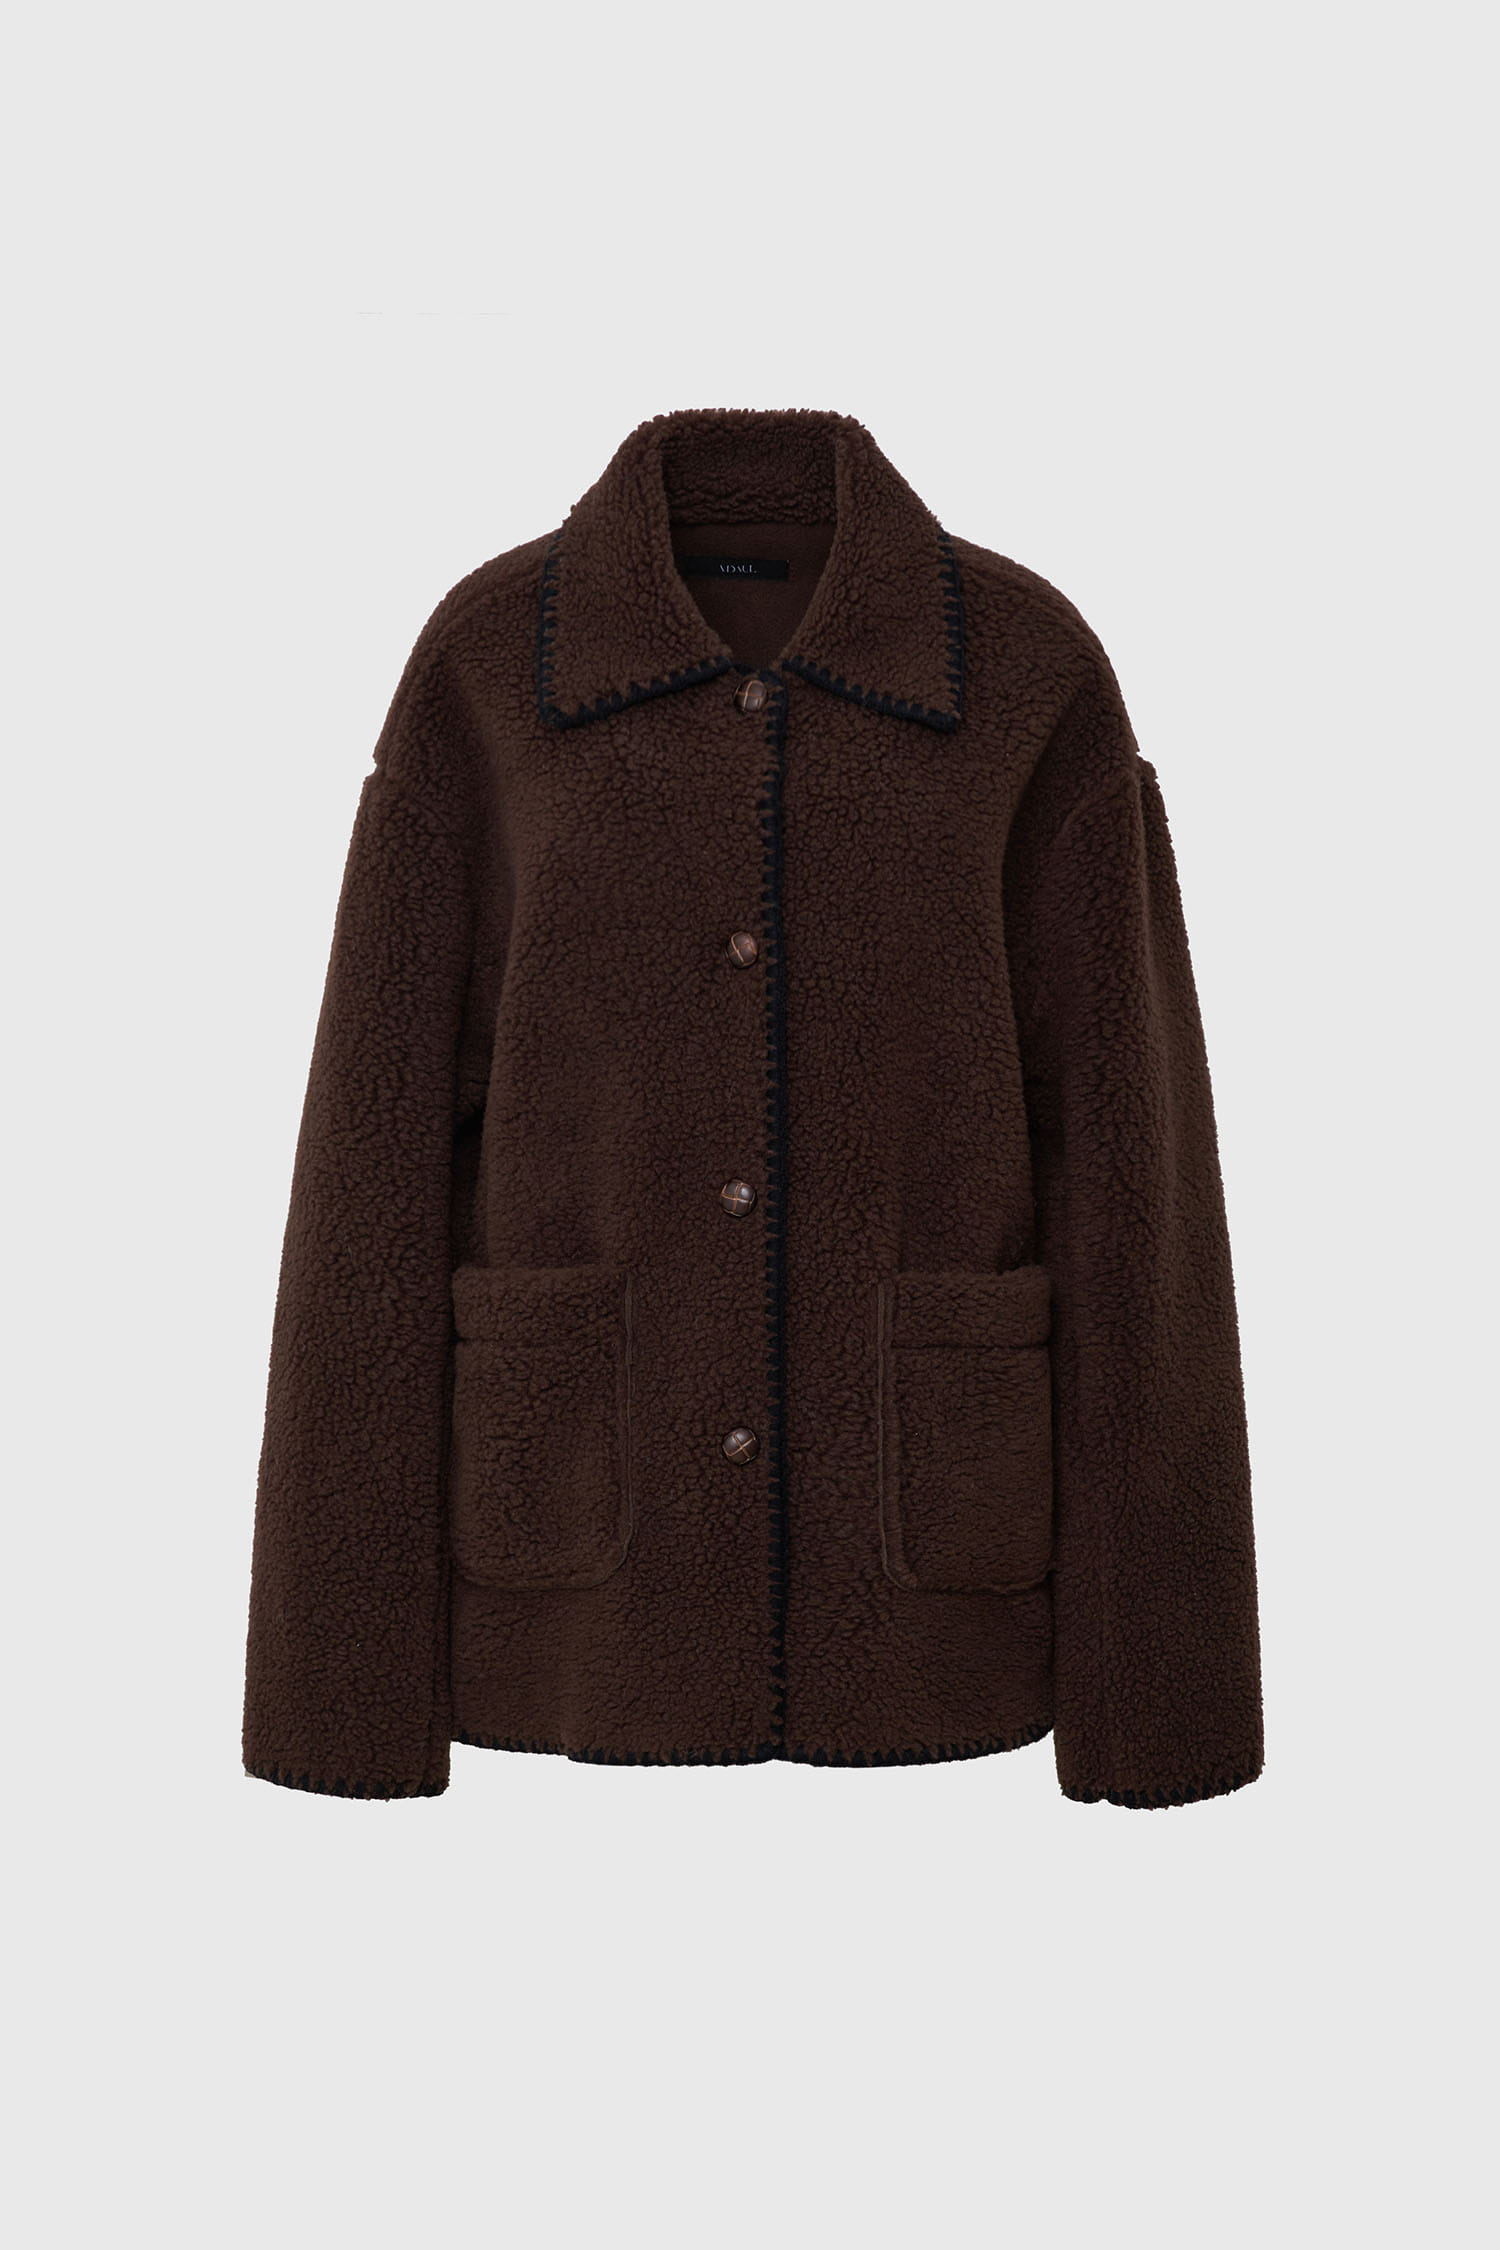 Tin fleece reversible collar jacket - brown